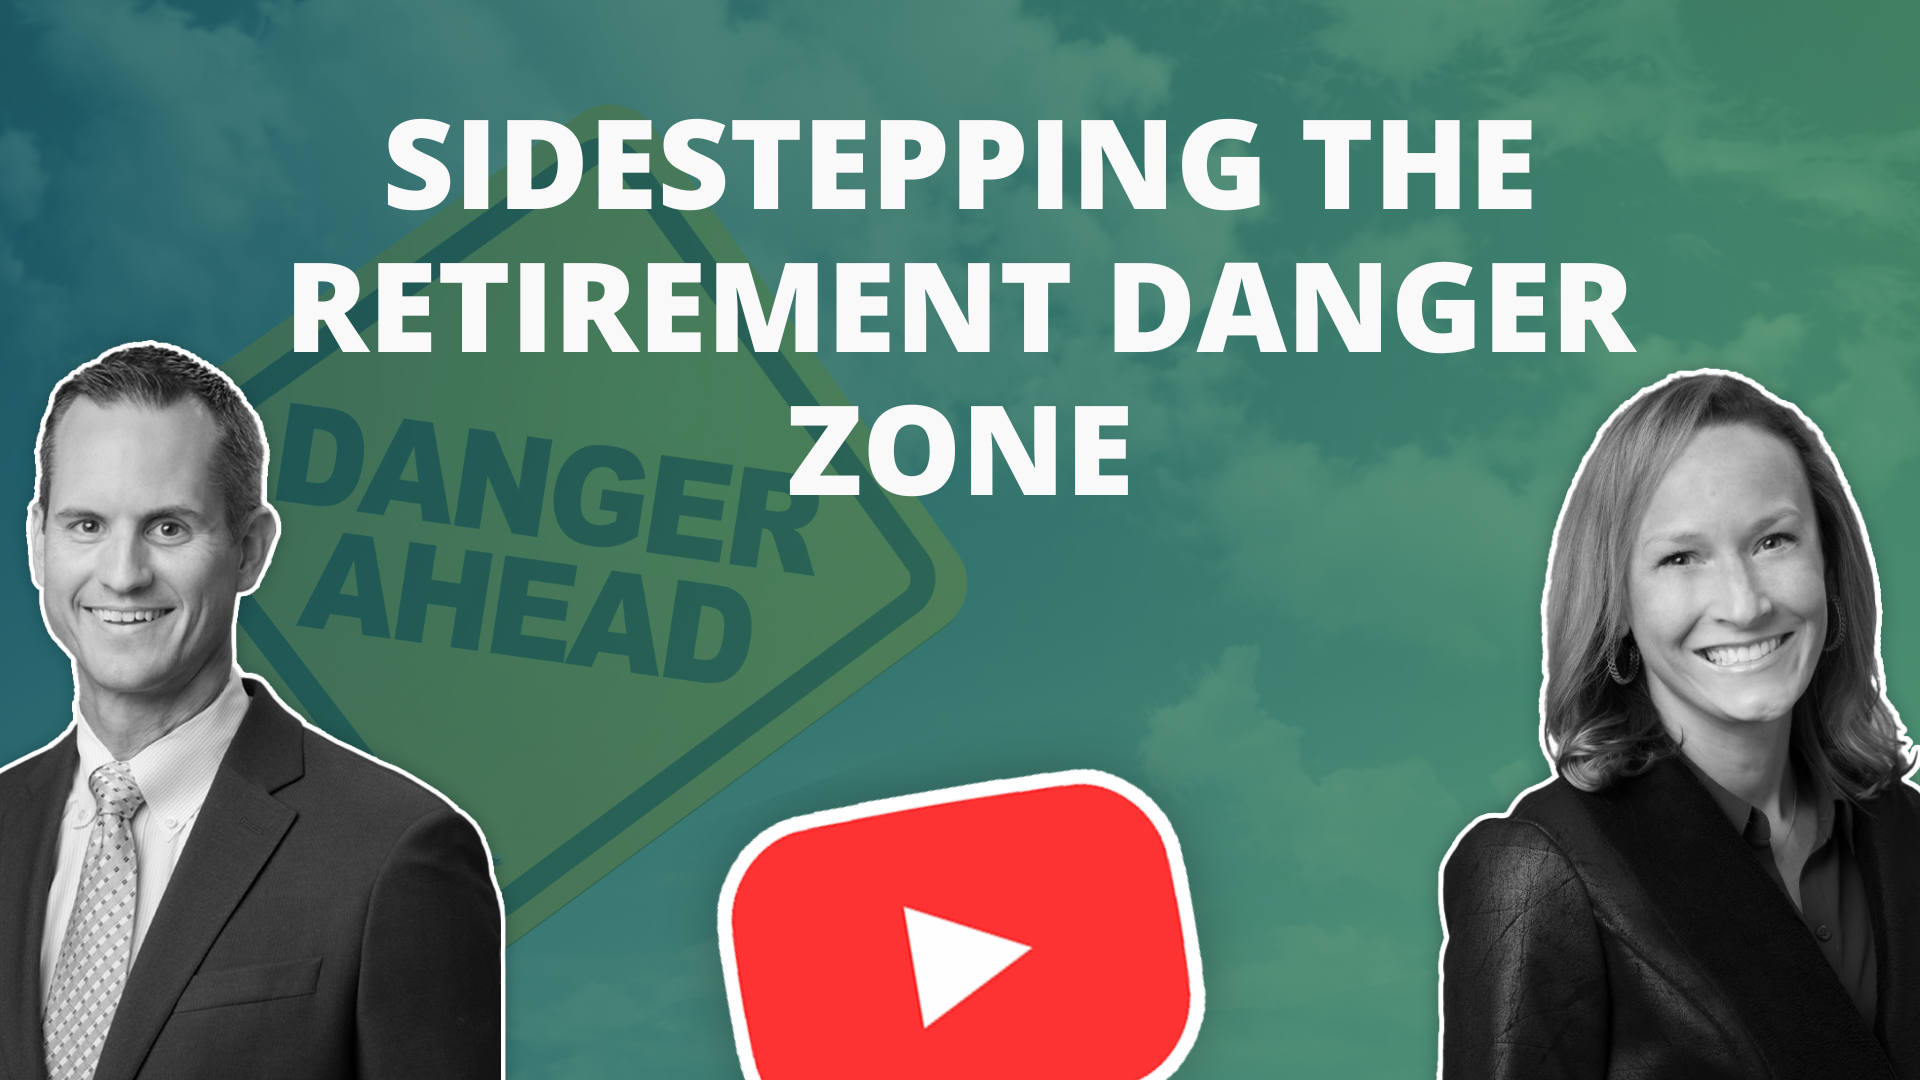 Sidestepping the retirement danger zone